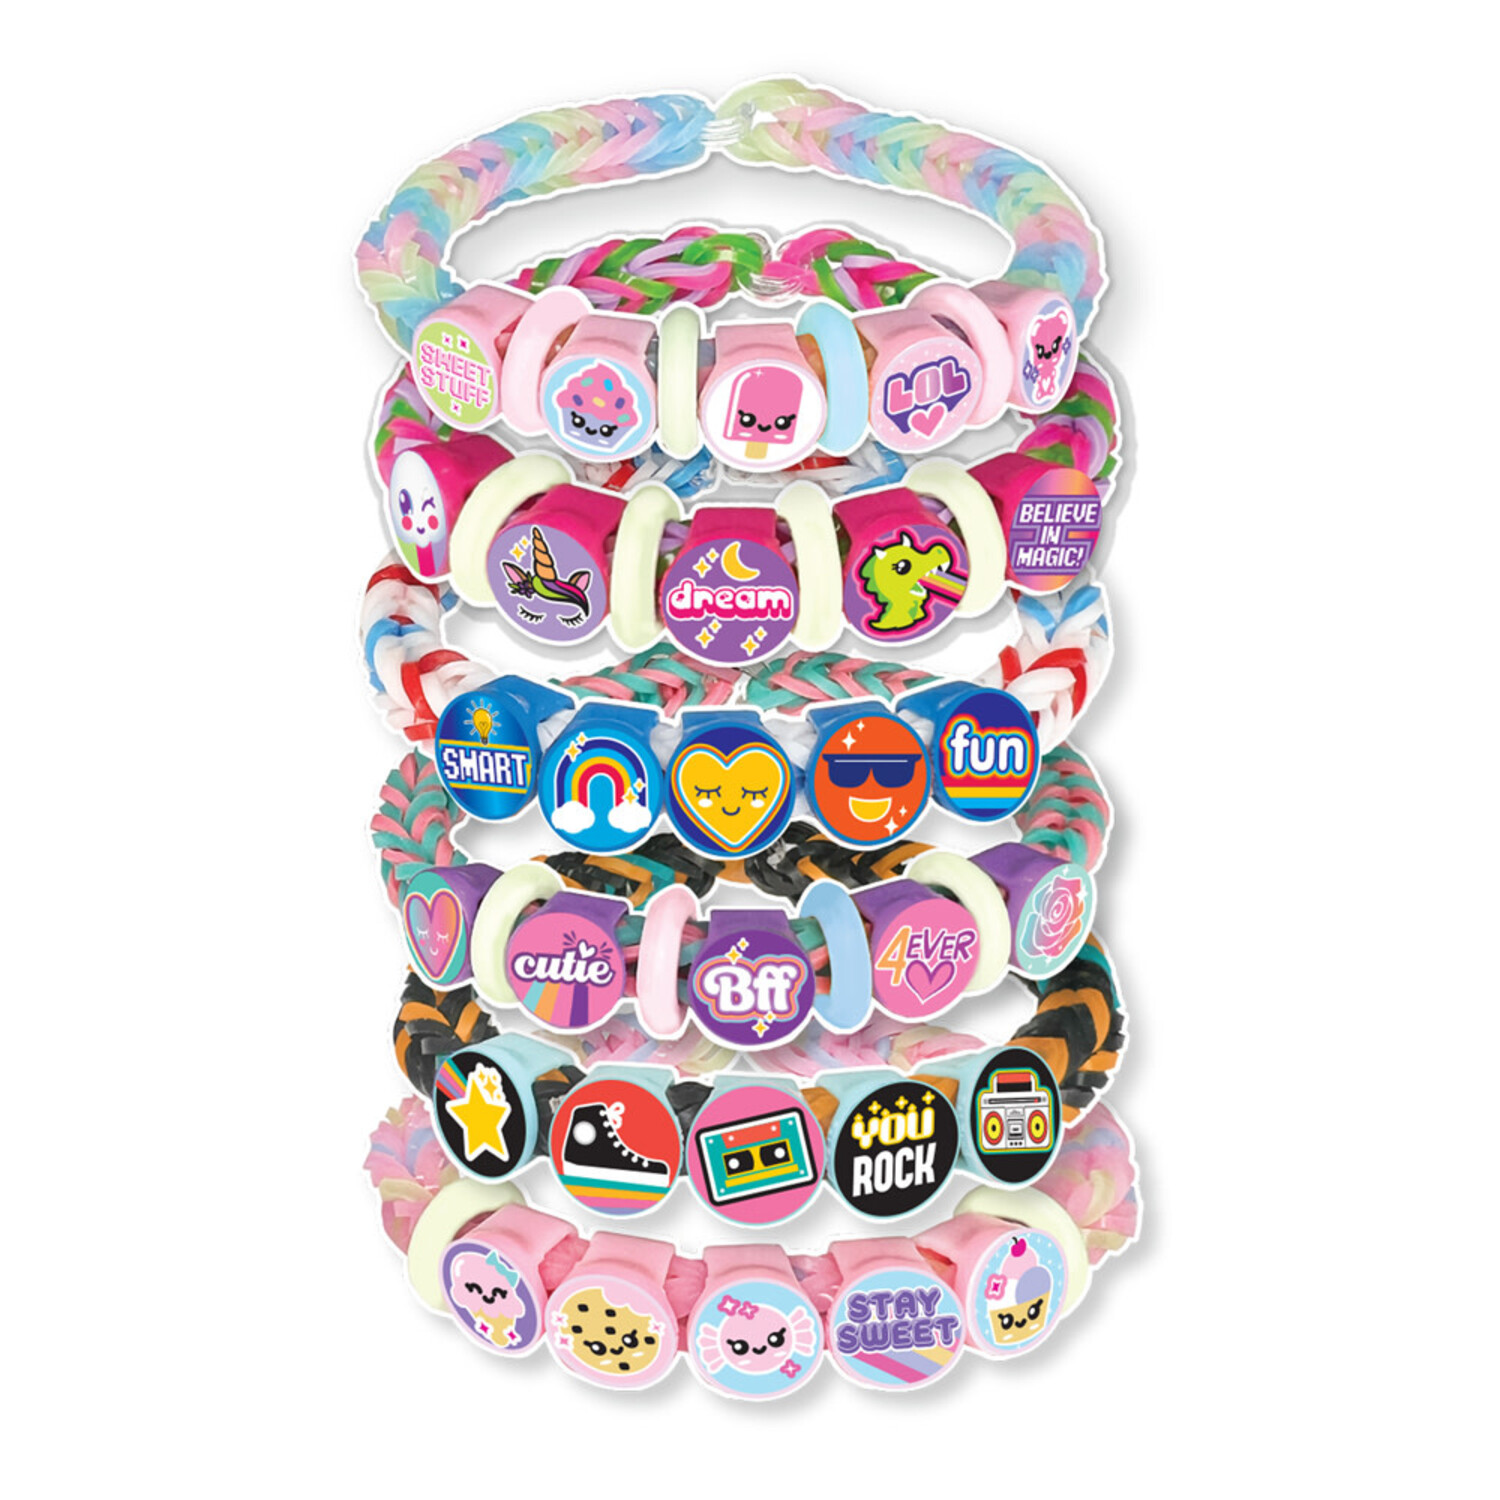 Rainbow Loom Beadmoji Mini Combo Kit – Happy Up Inc Toys & Games